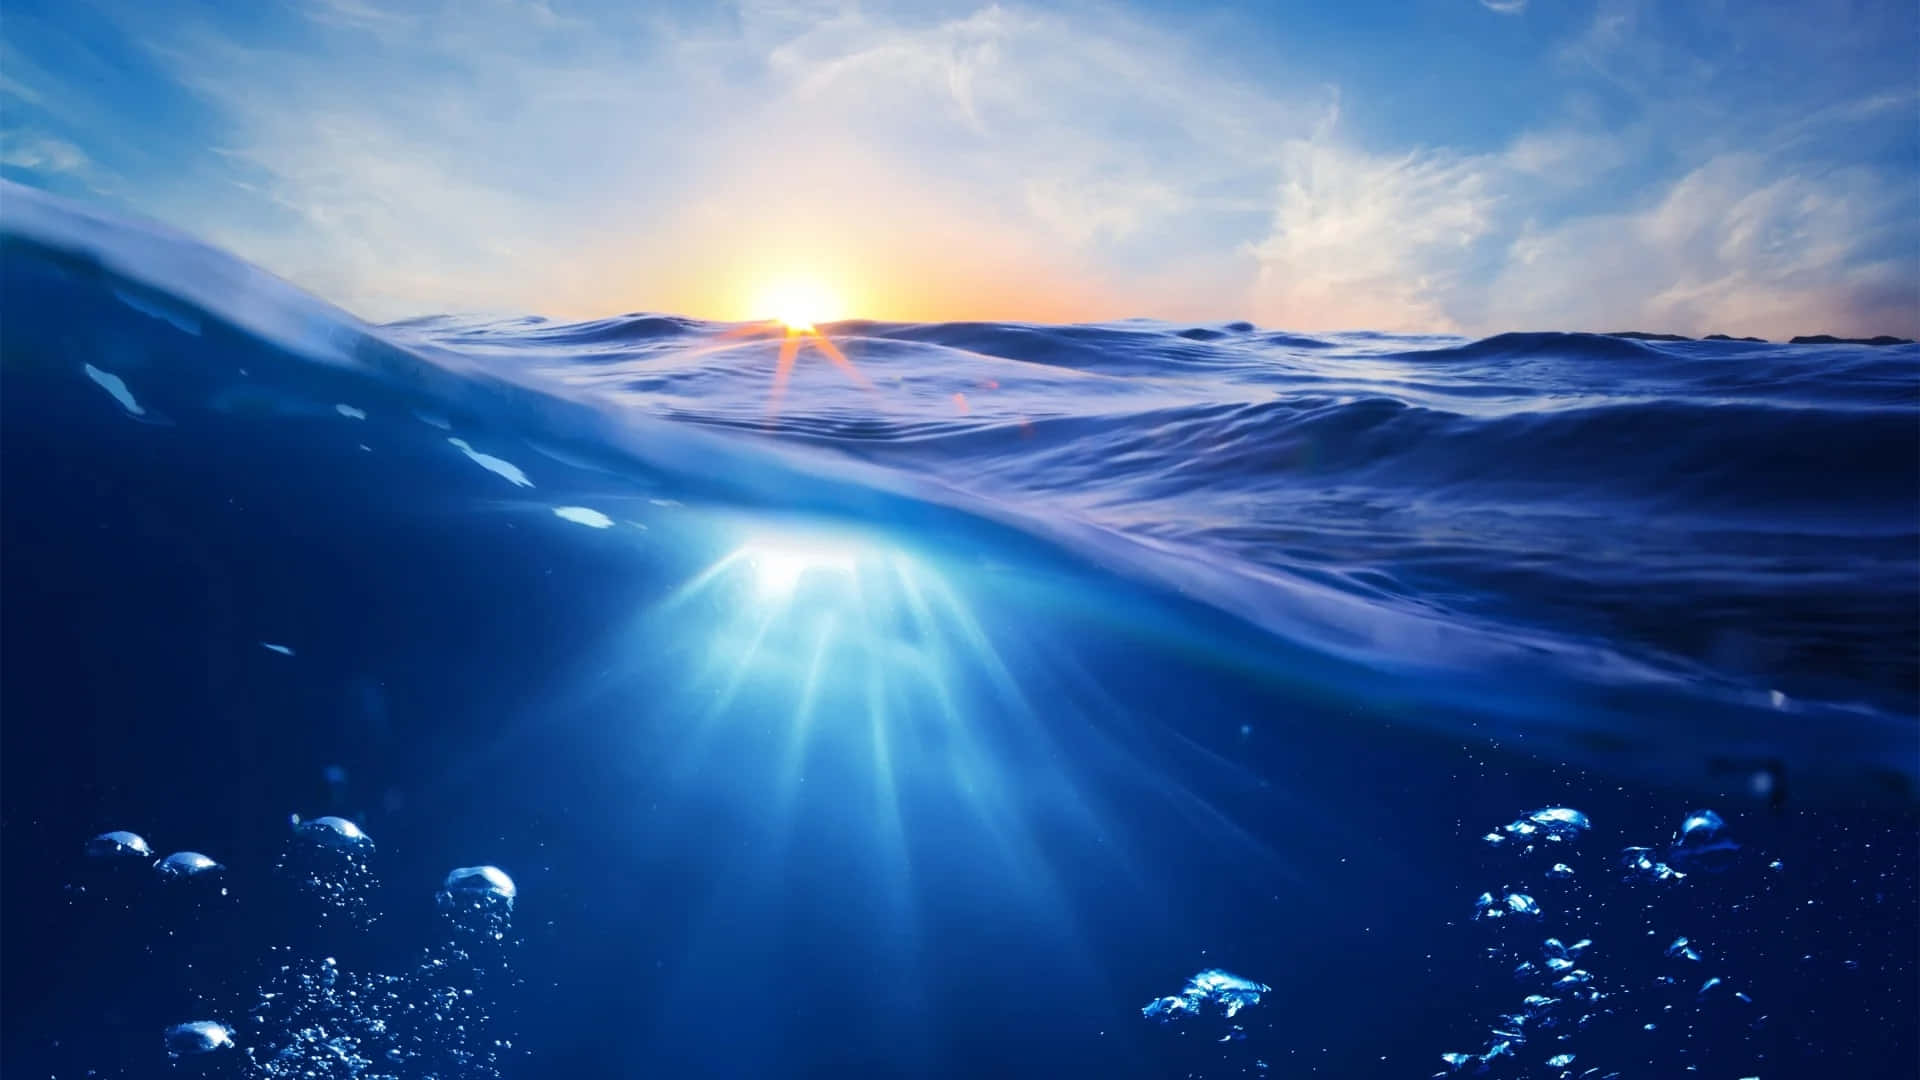 Sunrise Underwater View.jpg Wallpaper